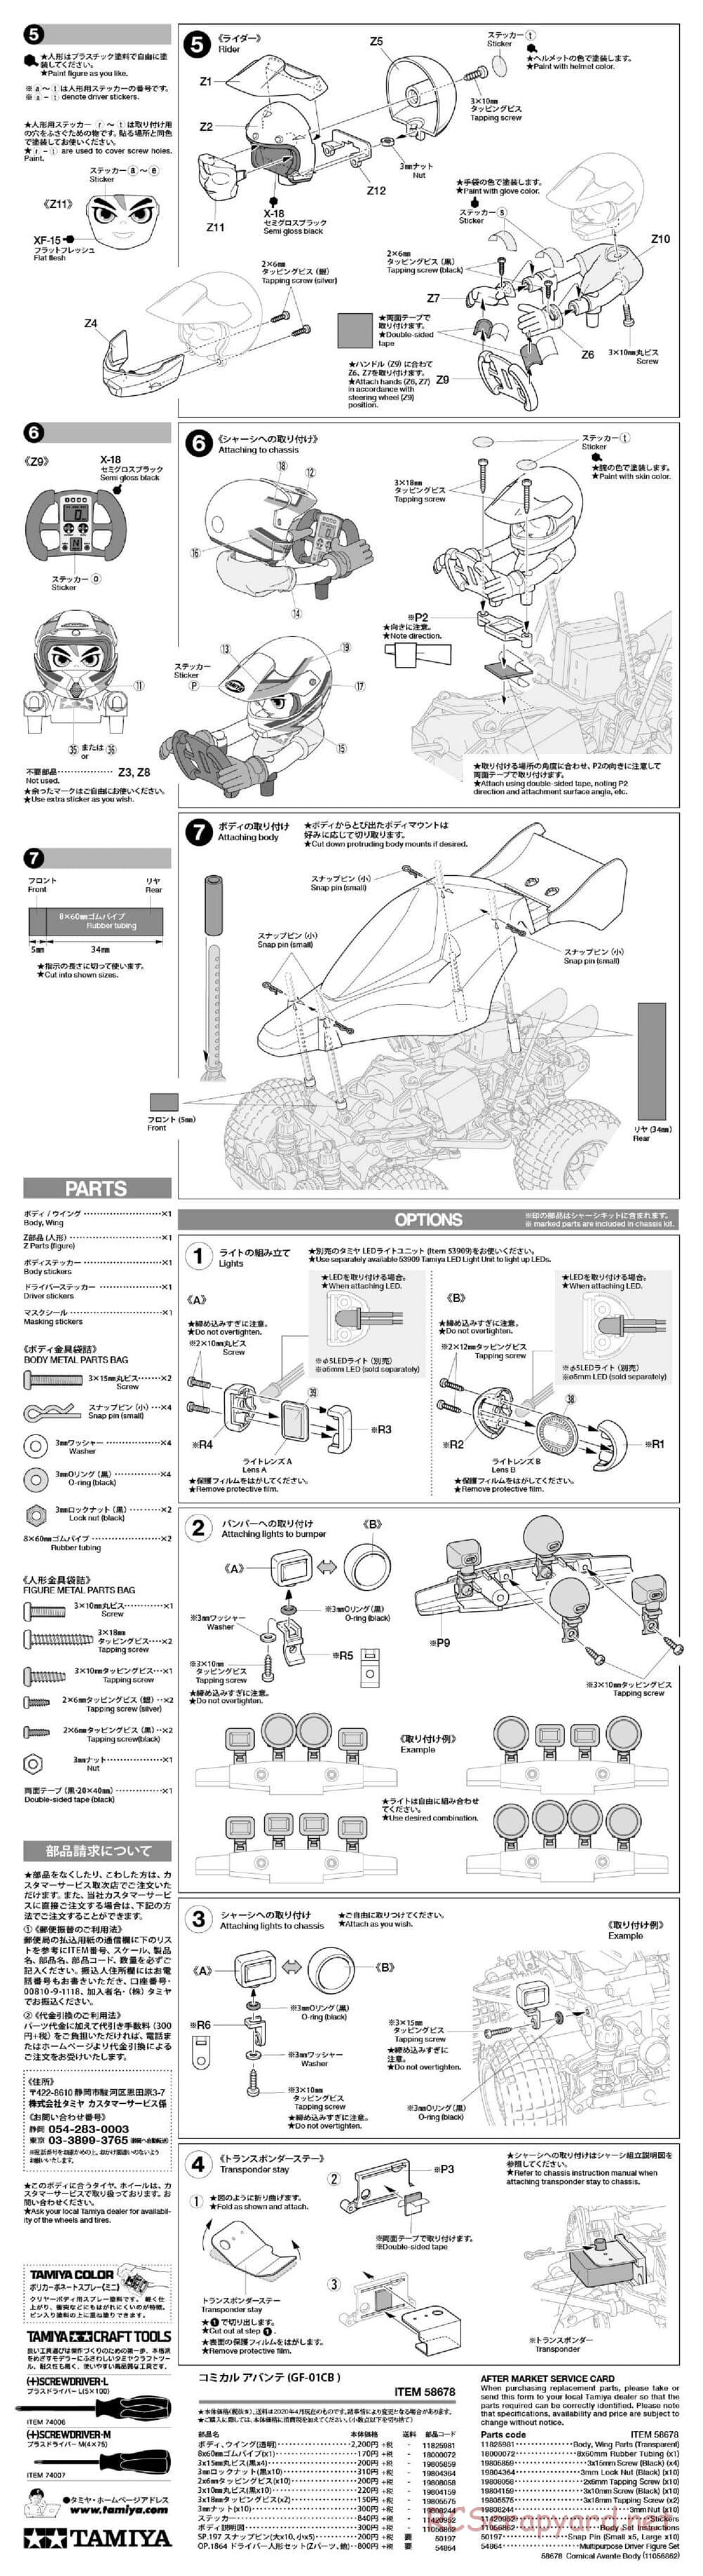 Tamiya - Comical Avante - GF-01CB Chassis - Manual - Page 2